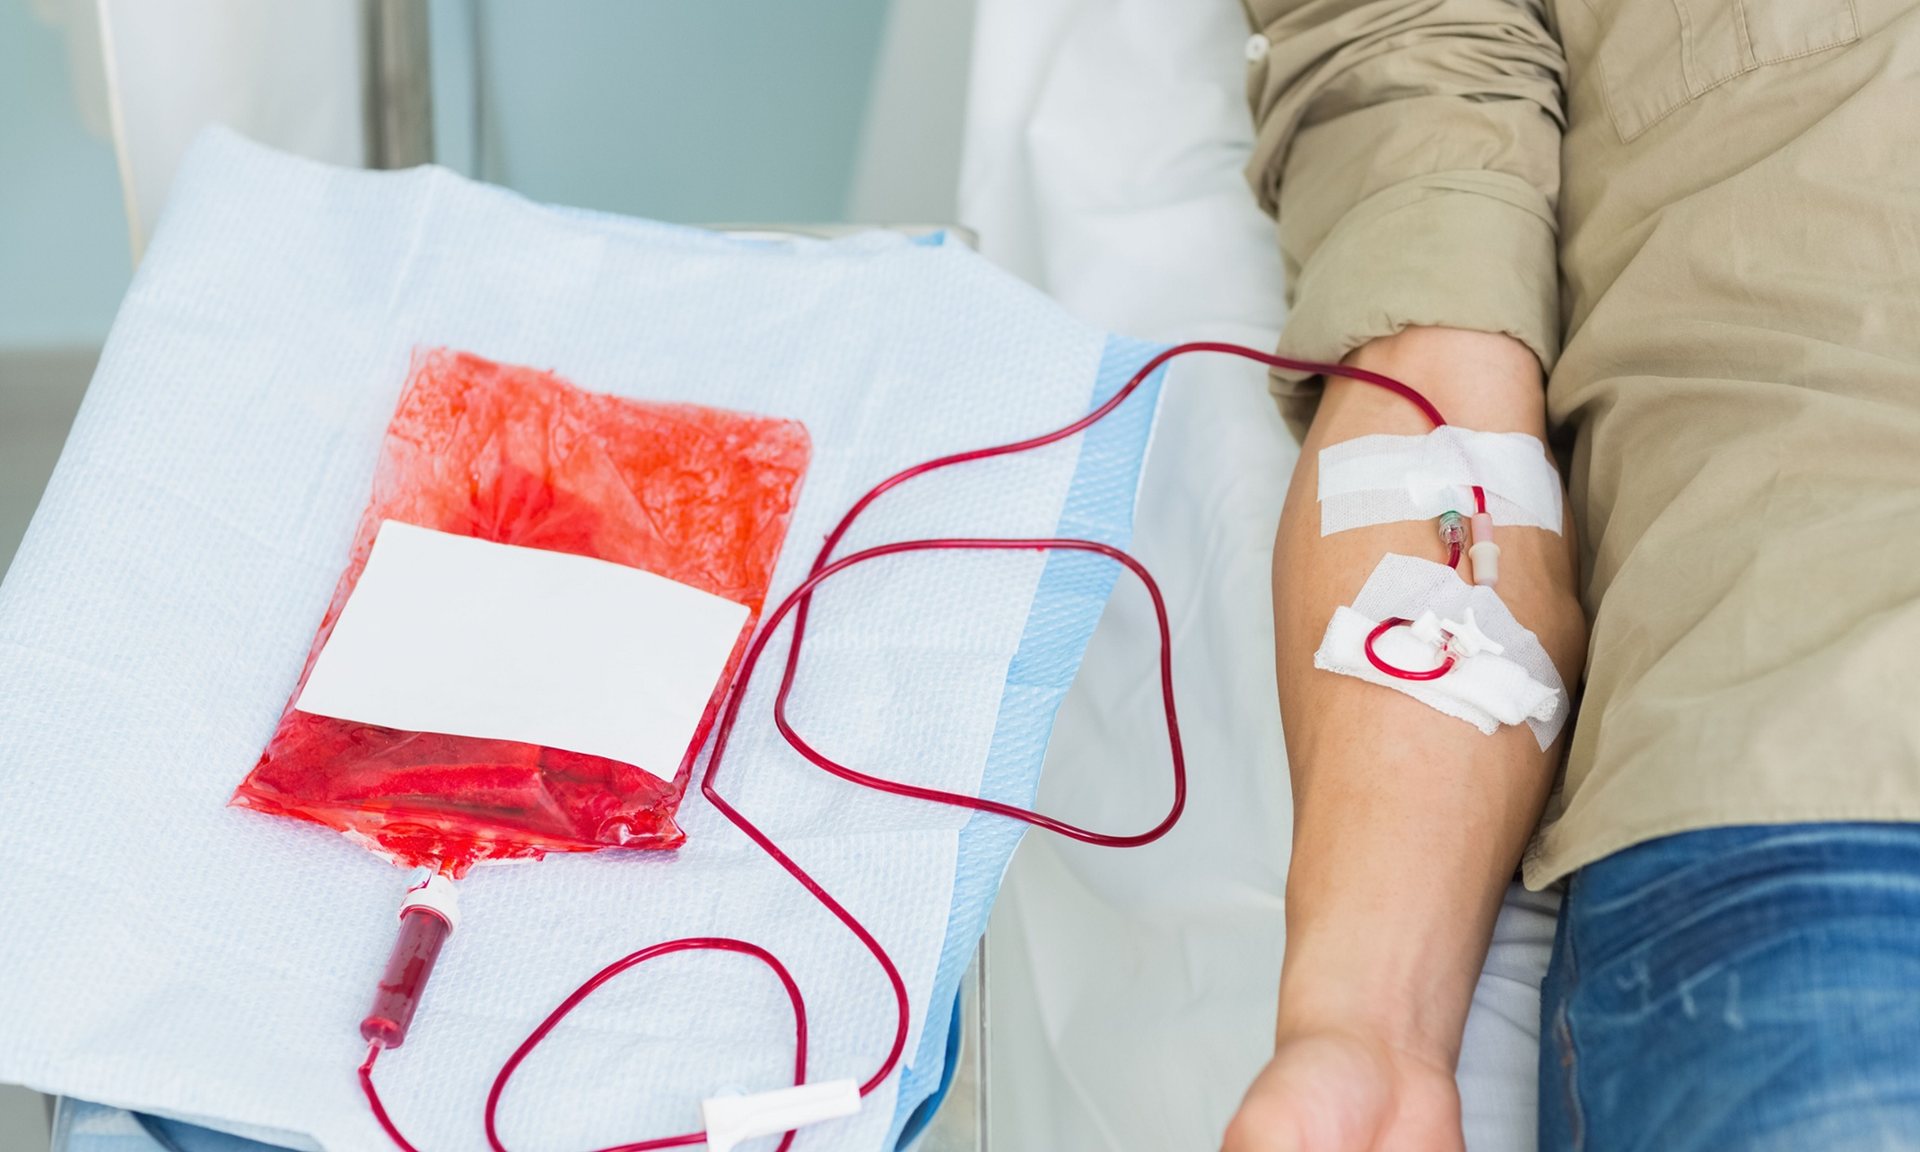 Aυξημένες ανάγκες για αίμα όλων των ομάδων λόγω τροχαίων - Εκκλήσεις προς αιμοδότες 